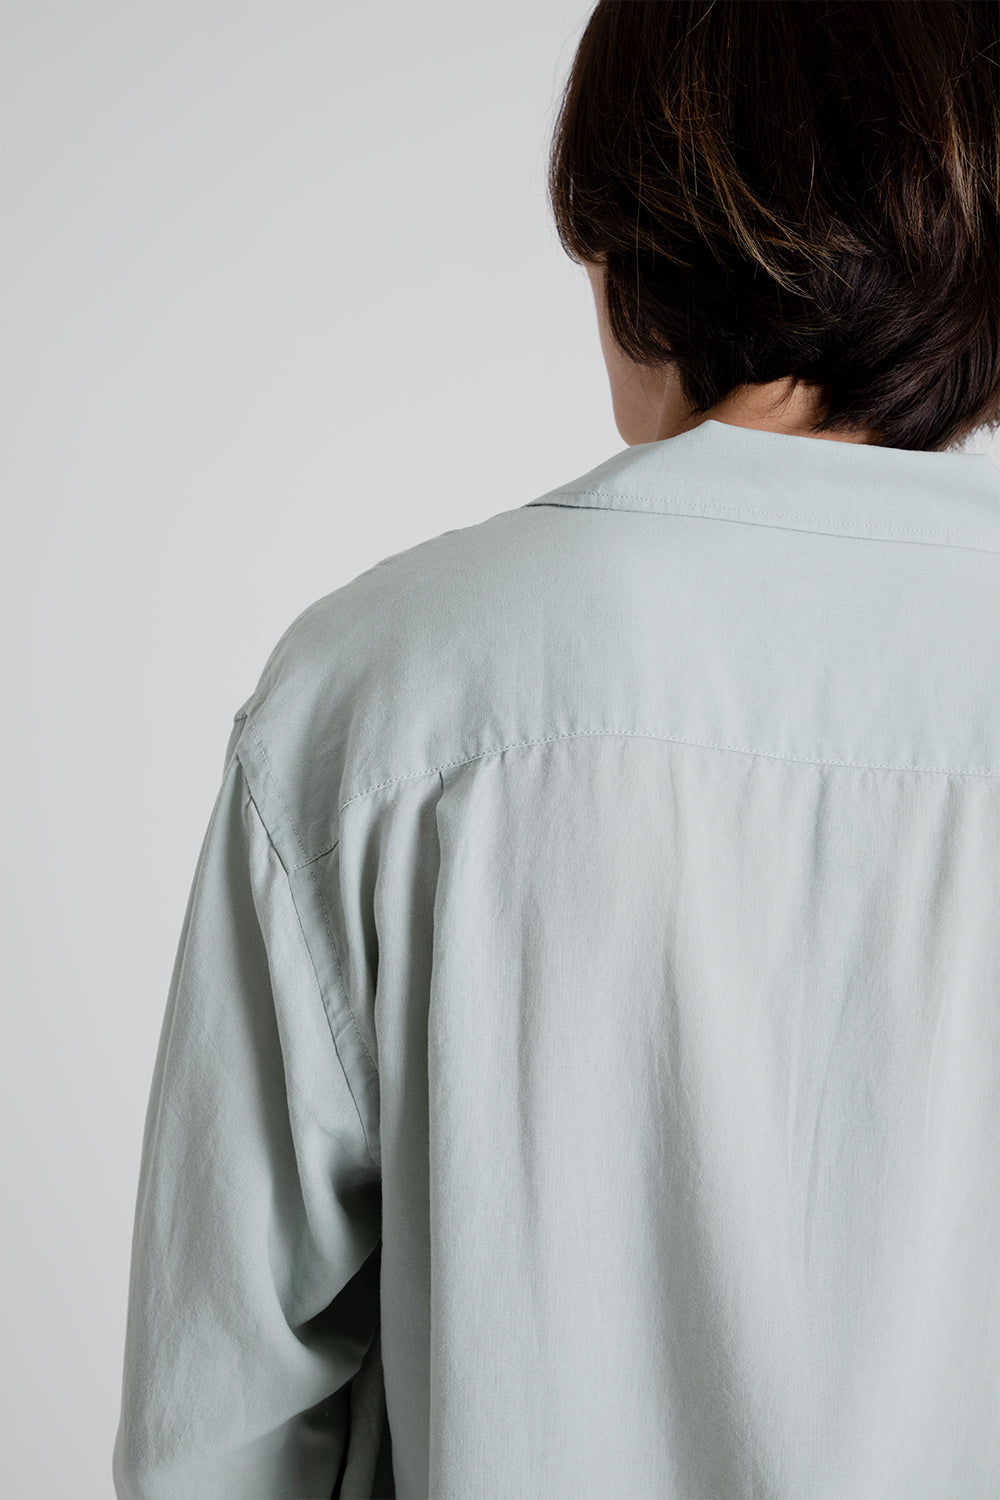 Frizmworks Tencel Cozy Shirt in Light Khaki